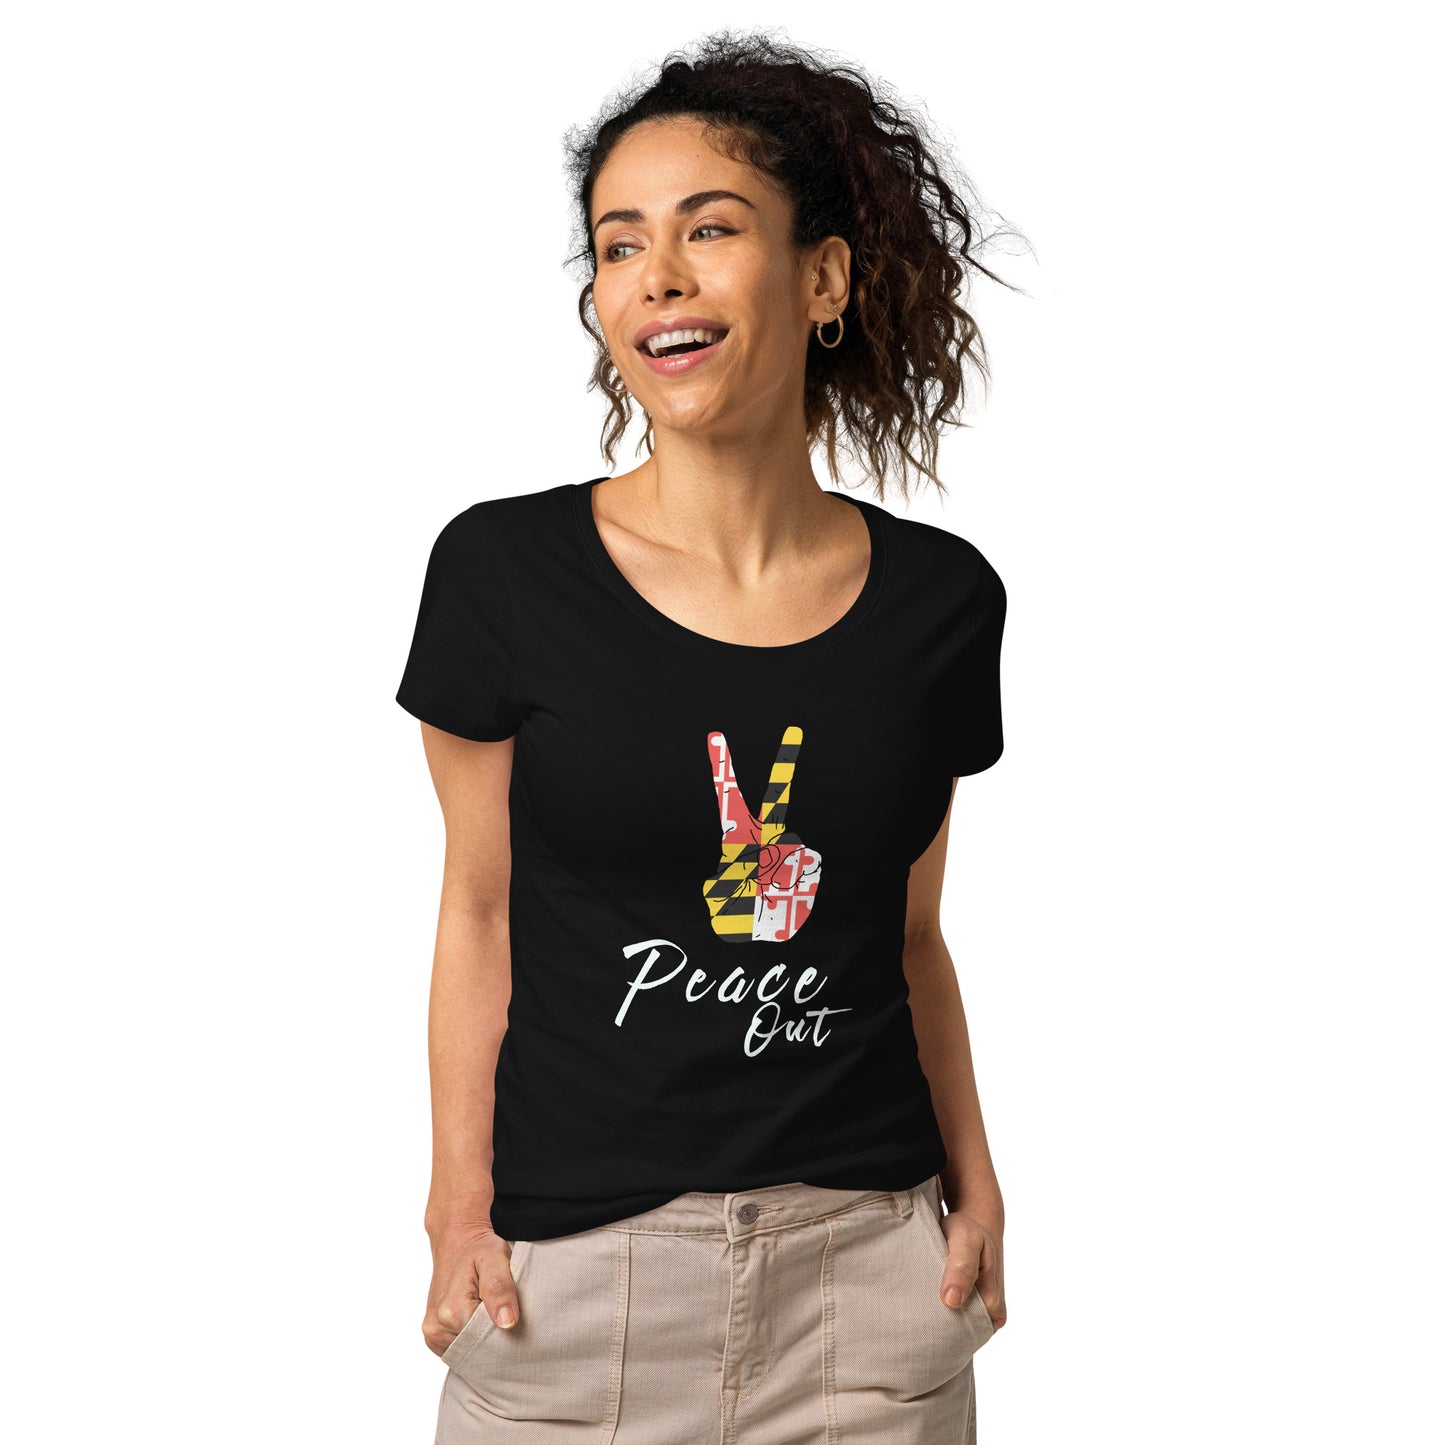 Women’s 301 Peace t-shirt